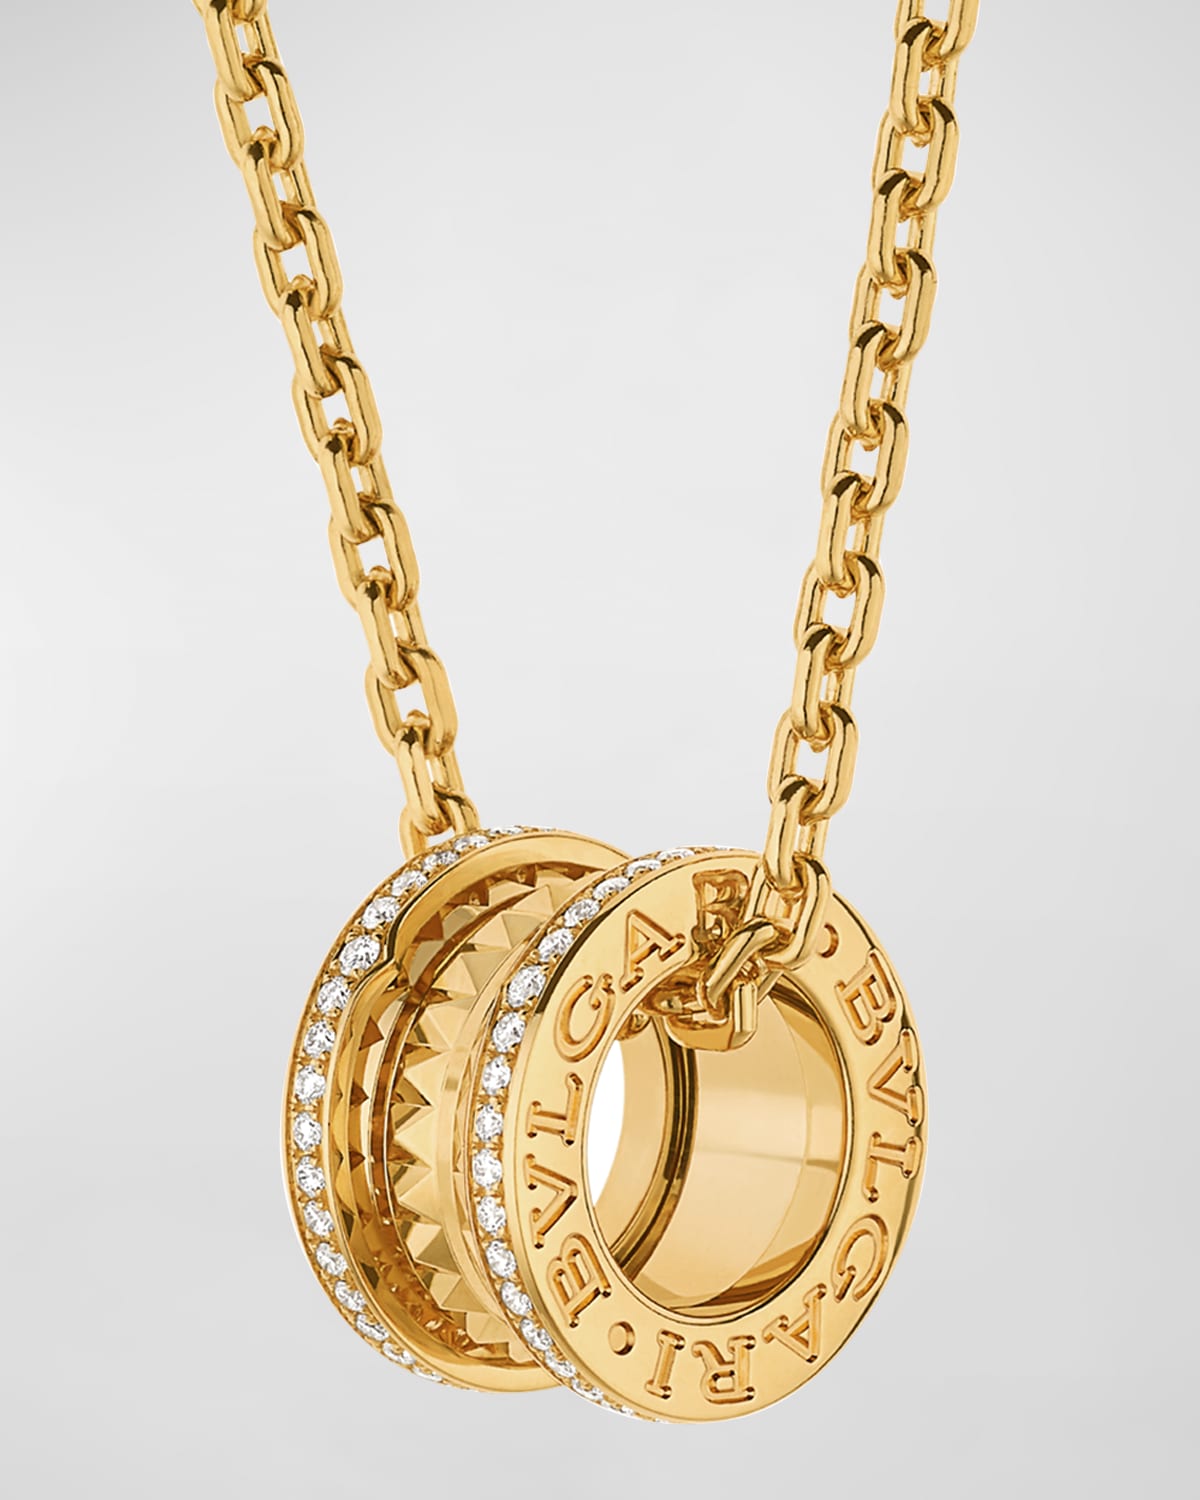 B.Zero1 Pendant Necklace in Yellow Gold and Diamonds, 24